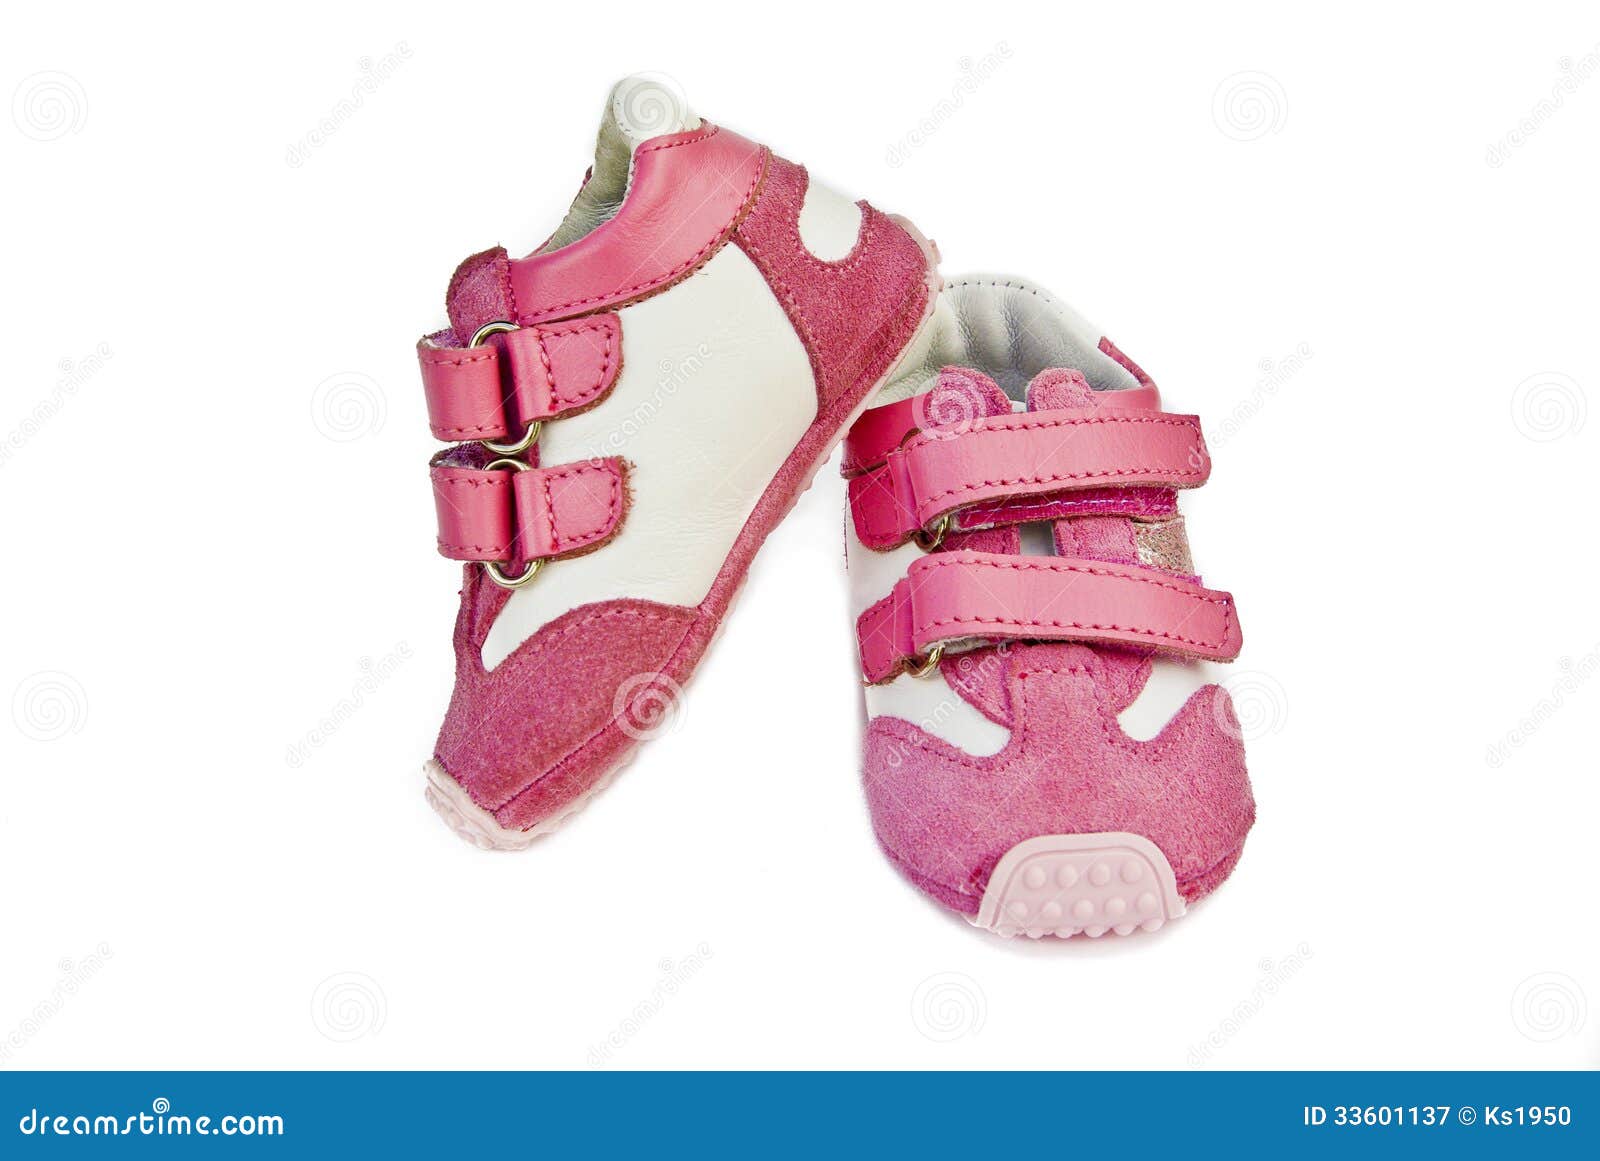 Footwear for child stock image. Image of violet, force - 33601137